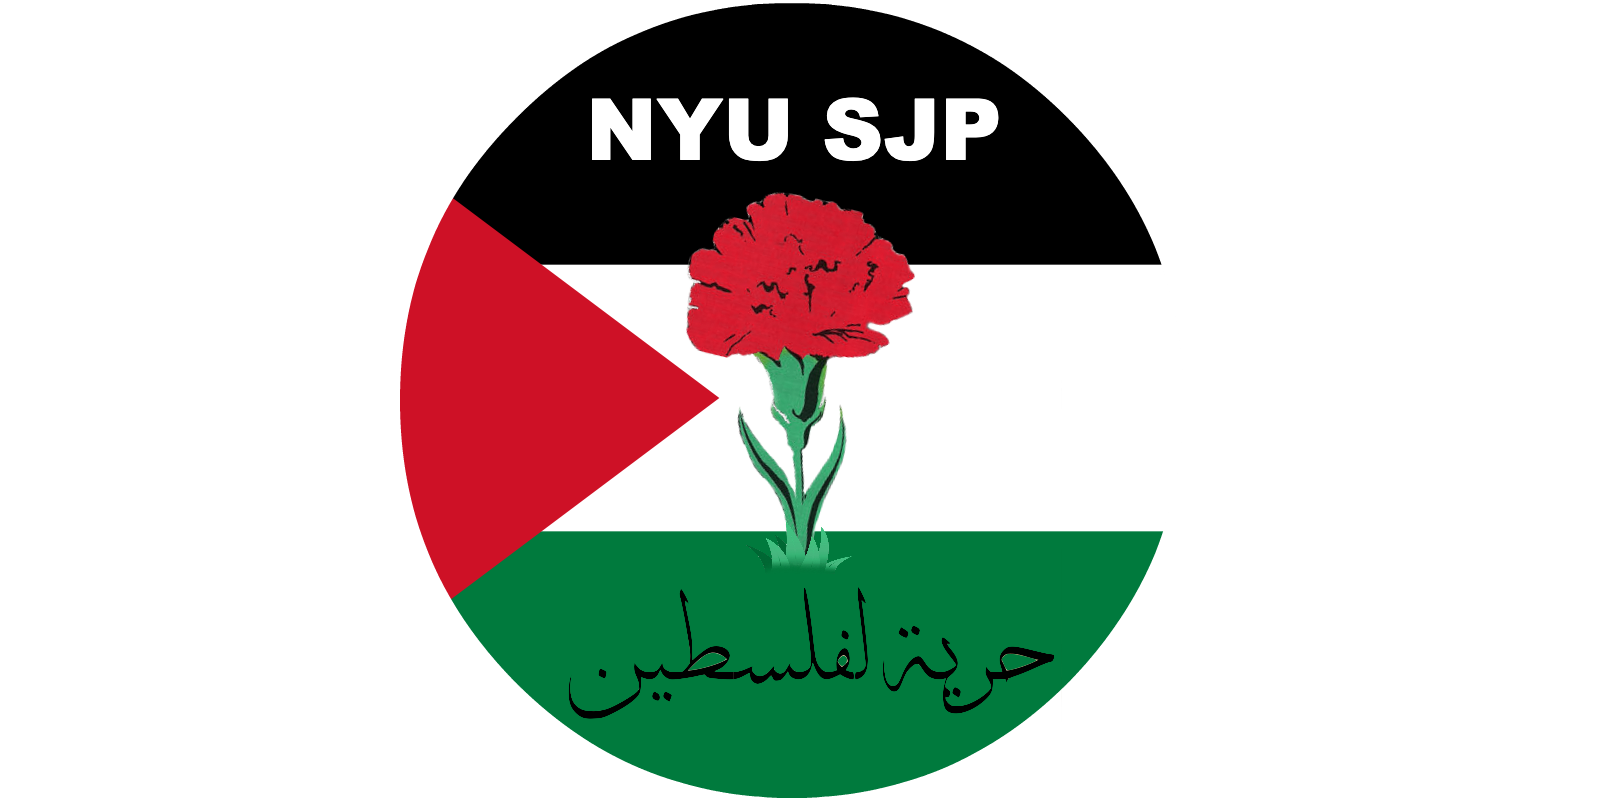 Copy of sjp sticker.png